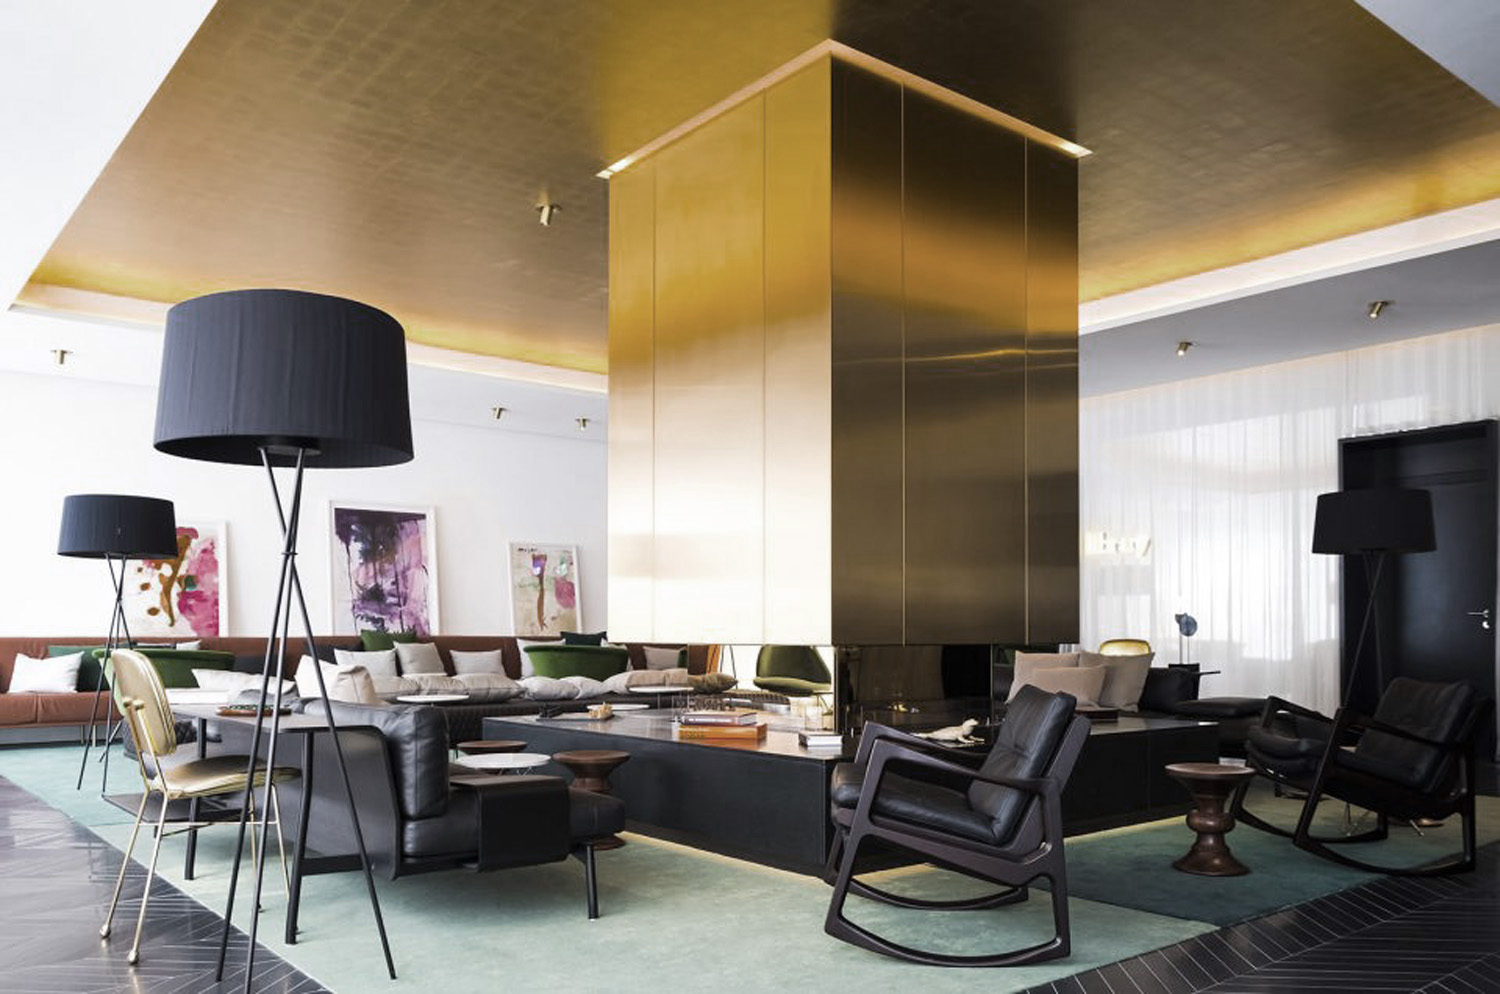 Hotel lounge space design